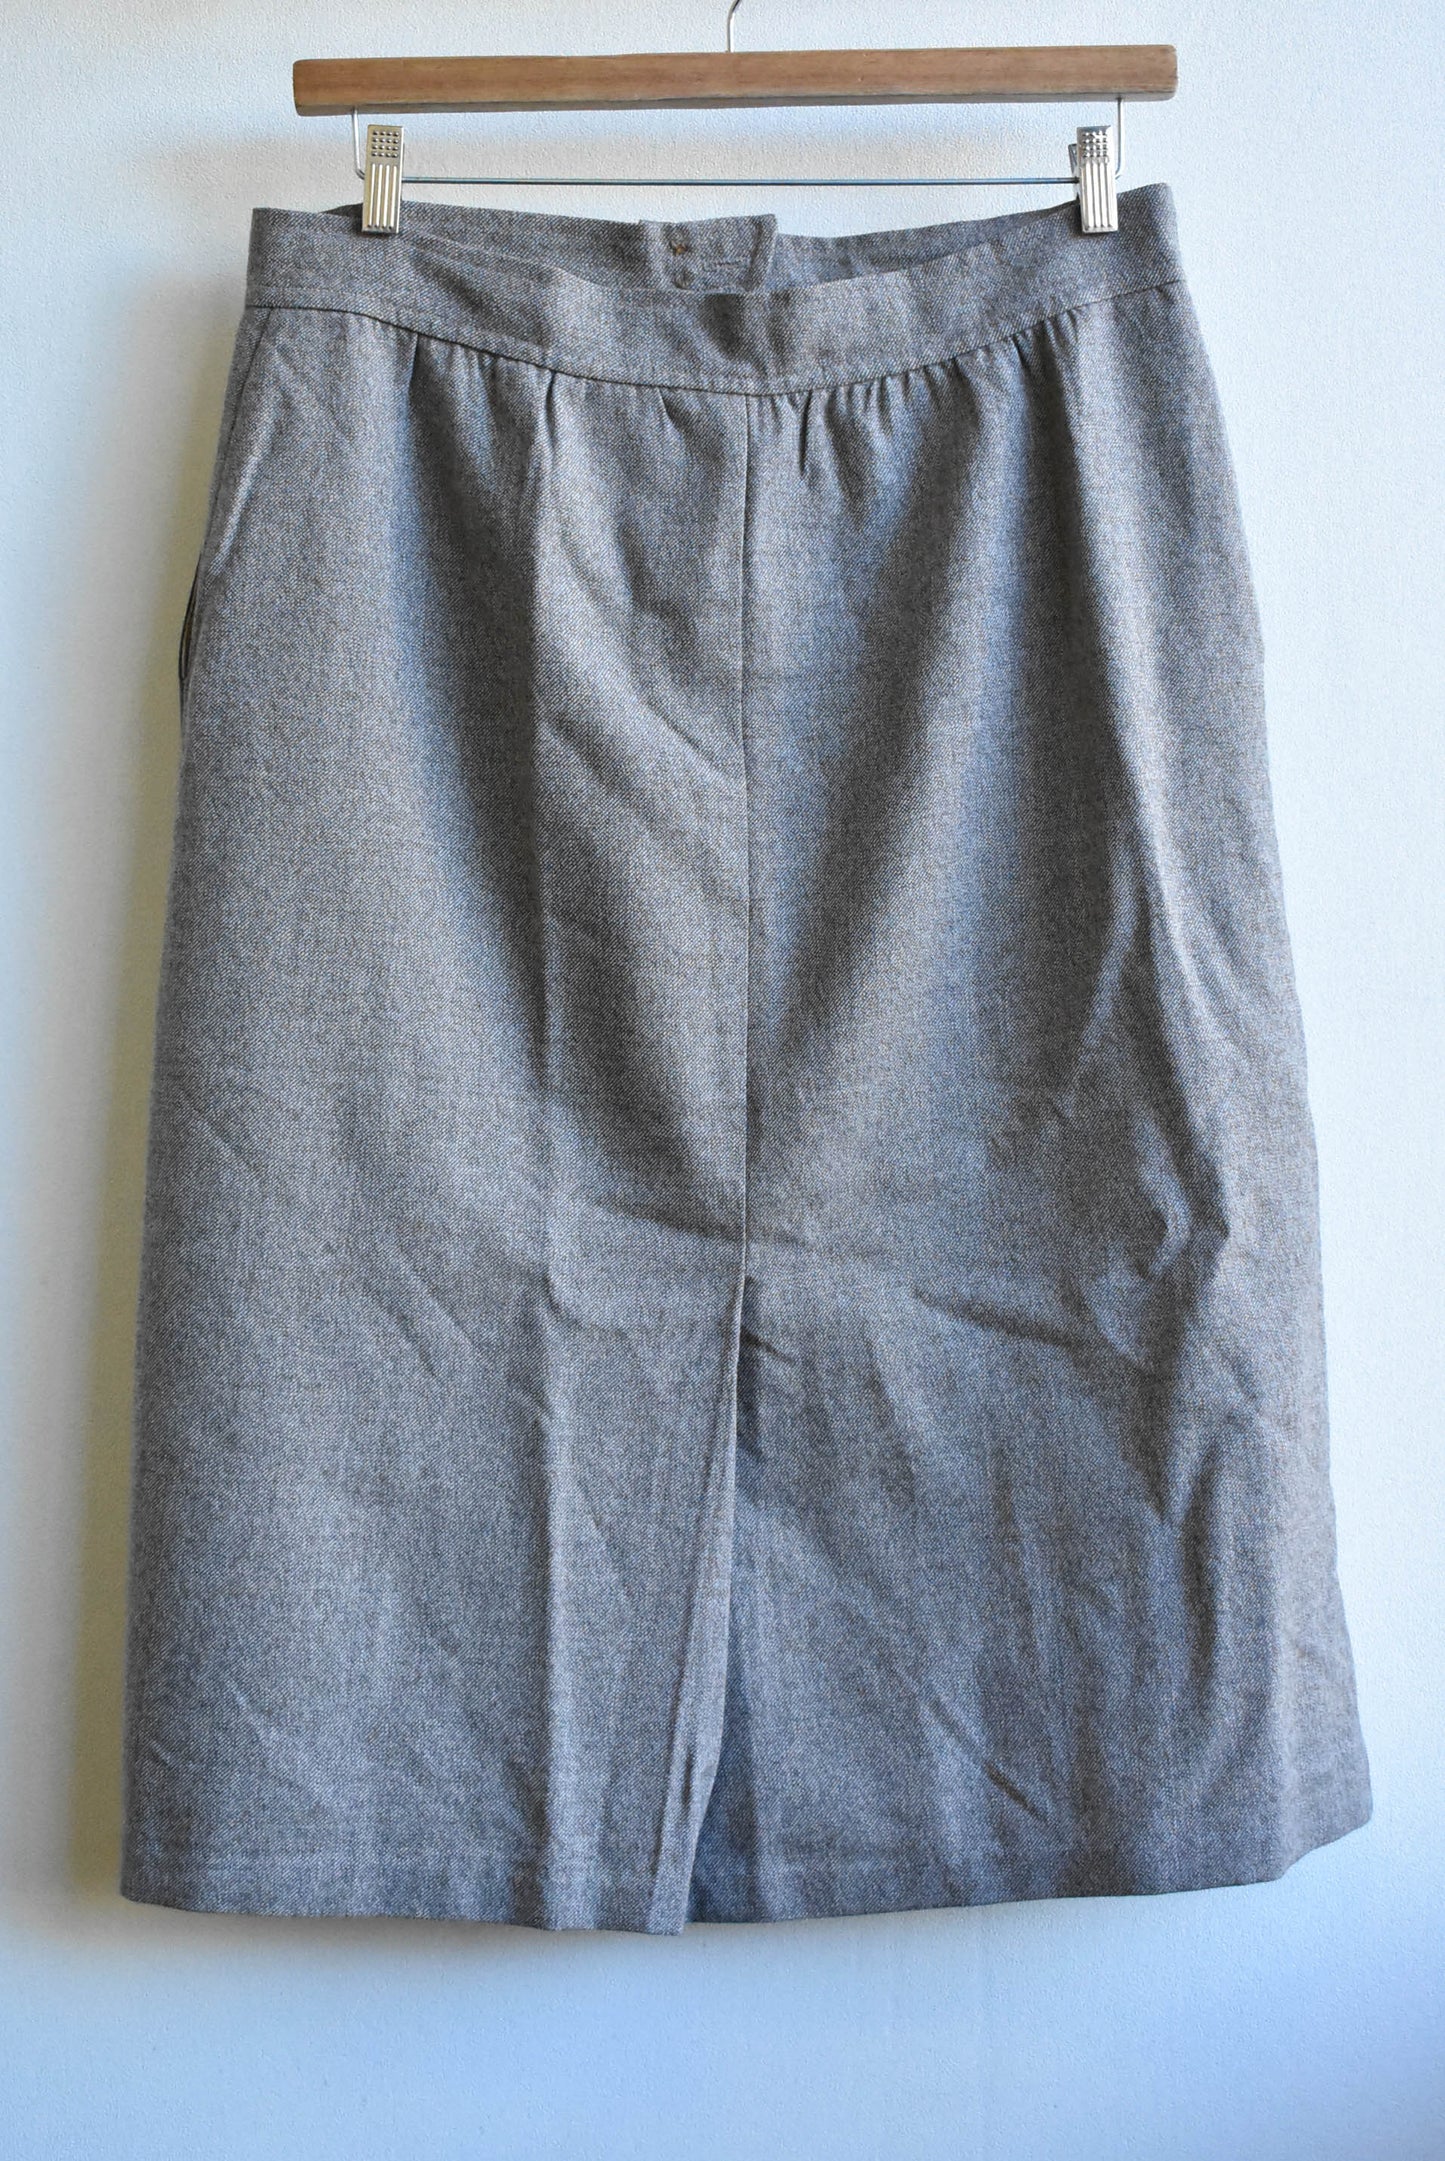 Sportscraft retro wool skirt, size 18